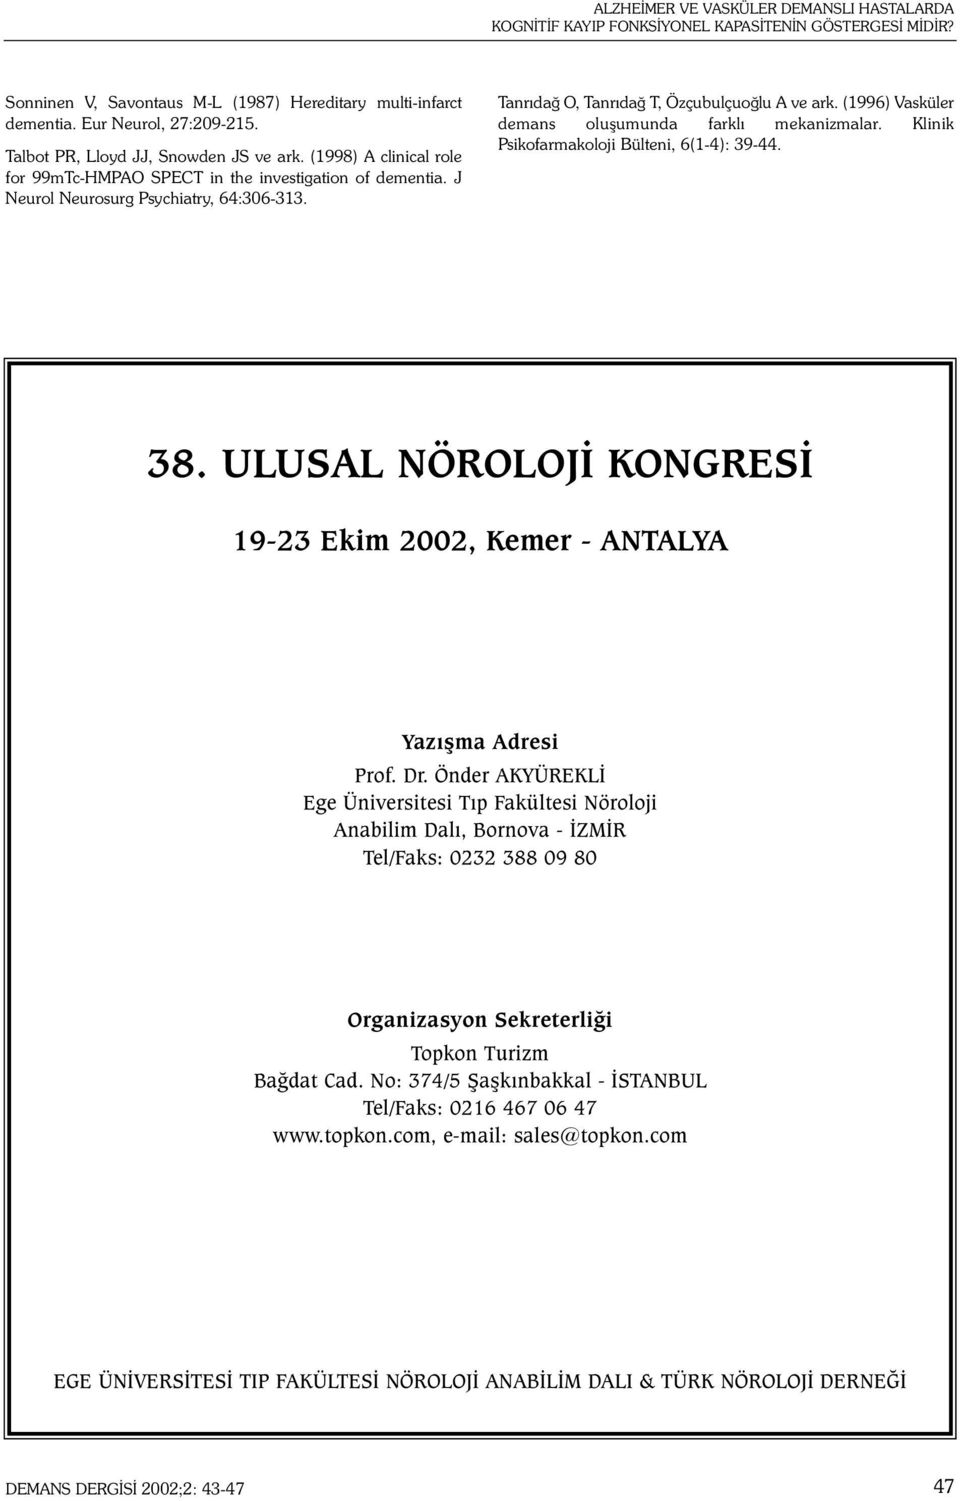 Tanrýdað O, Tanrýdað T, Özçubulçuoðlu A ve ark. (1996) Vasküler demans oluþumunda farklý mekanizmalar. Klinik Psikofarmakoloji Bülteni, 6(1-4): 39-44. 38.